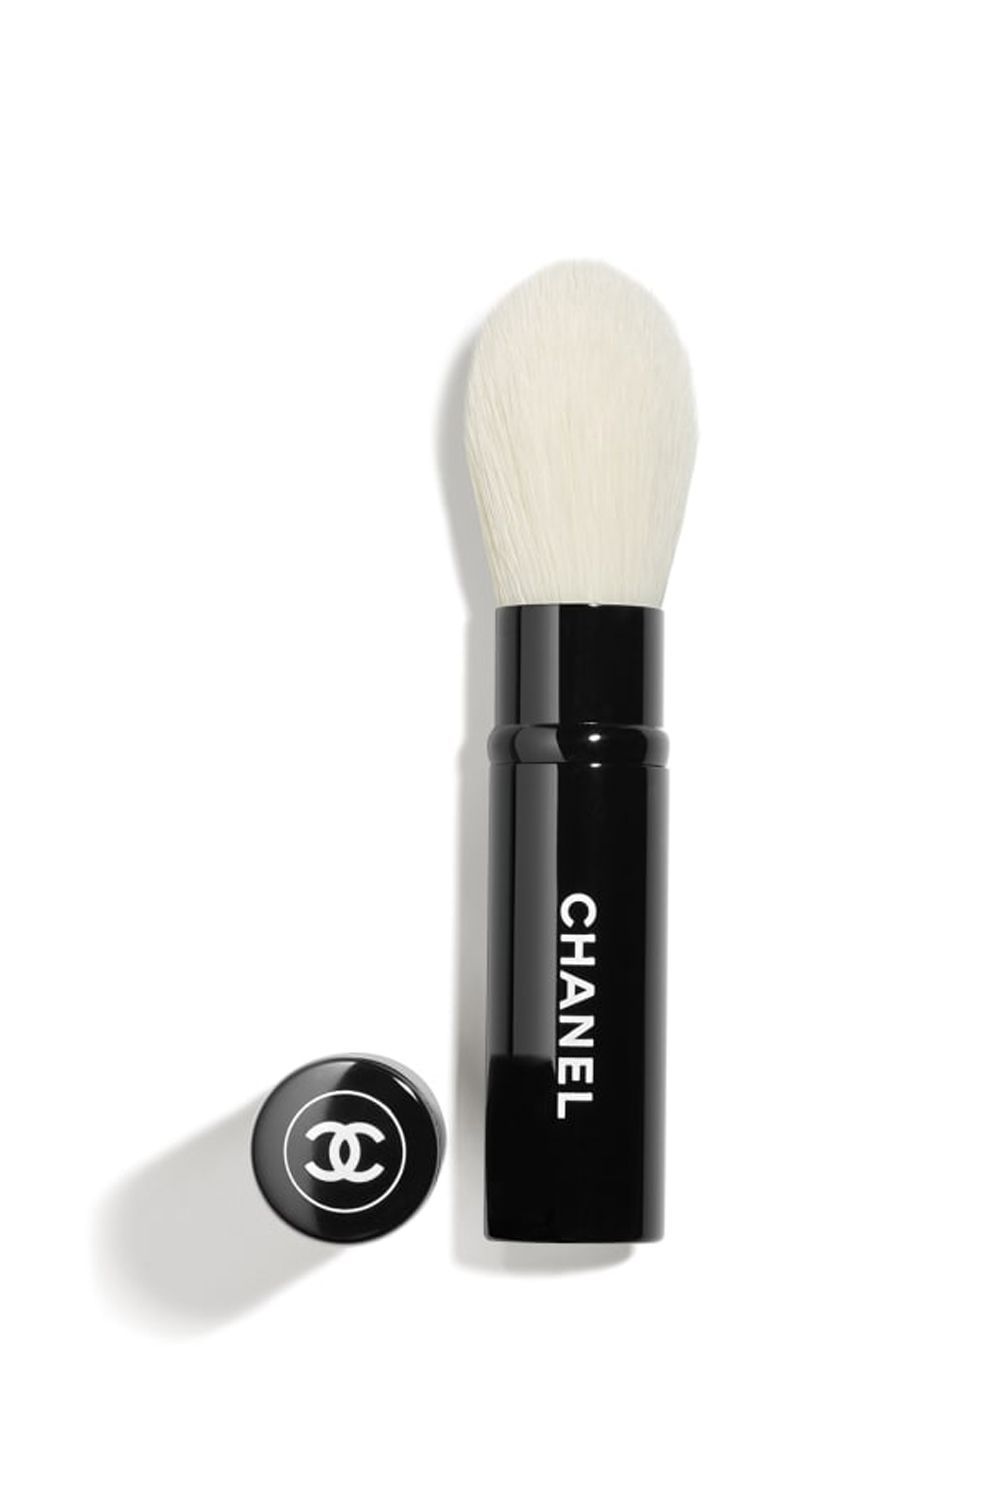 Chanel Les Pinceaux de Chanel Retractable Highlighter Brush N°111